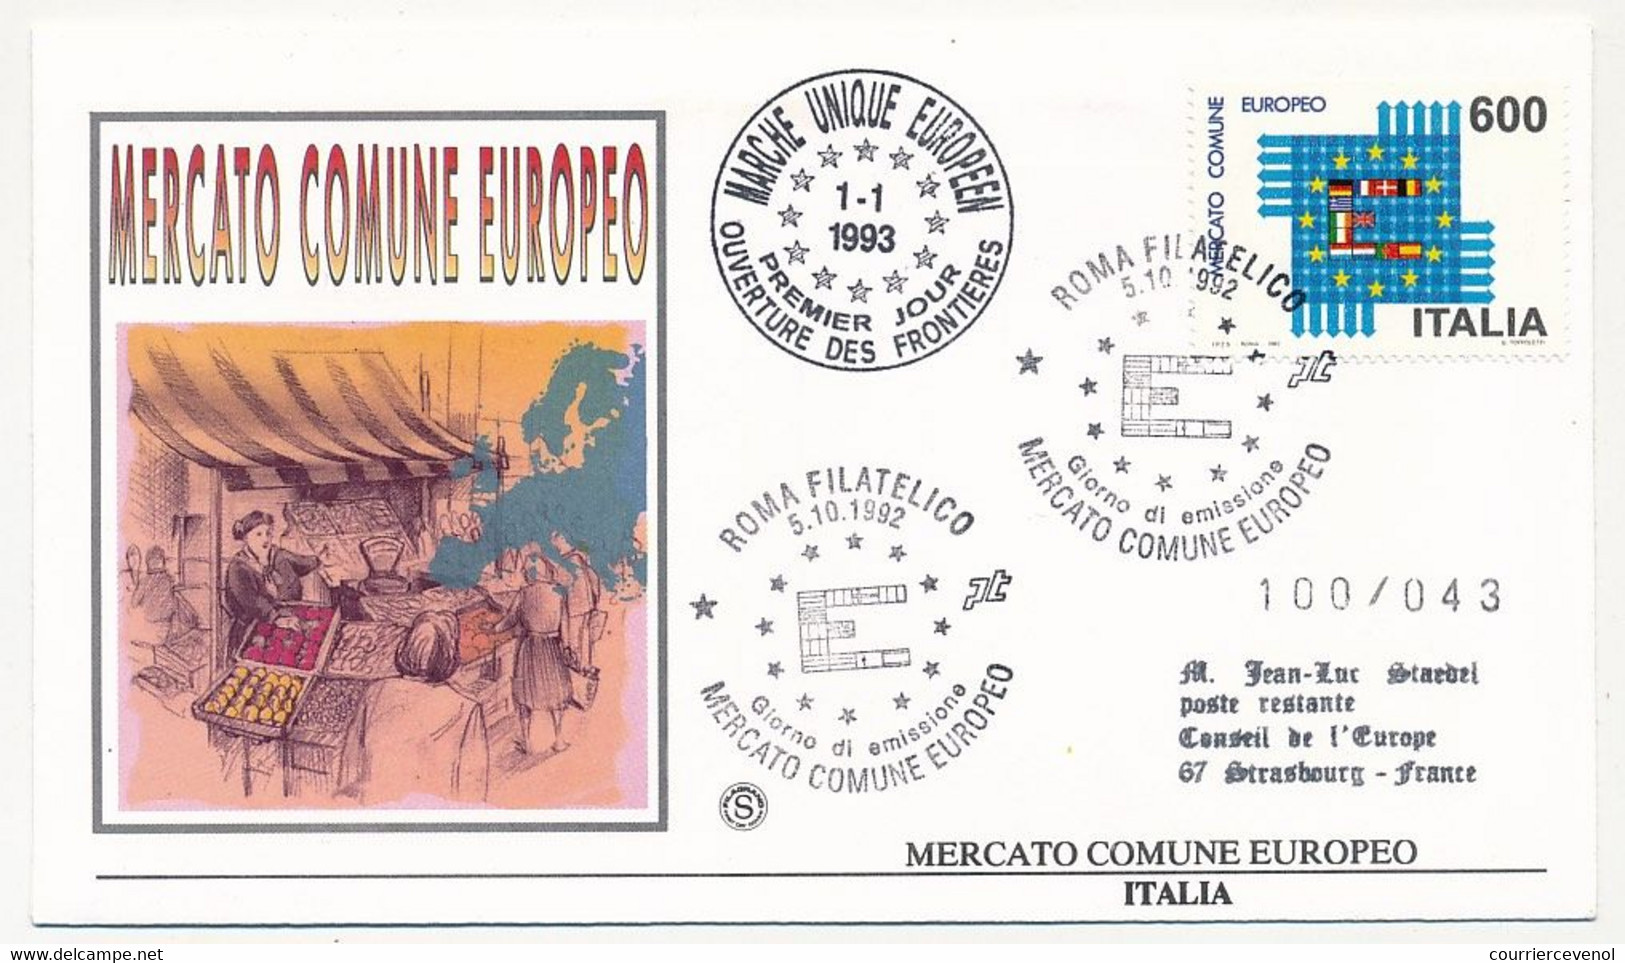 ITALIE - Enveloppe FDC - Mercato Comune Europeo (Marché Unique Européen) - Roma 5/10/1992 - European Ideas